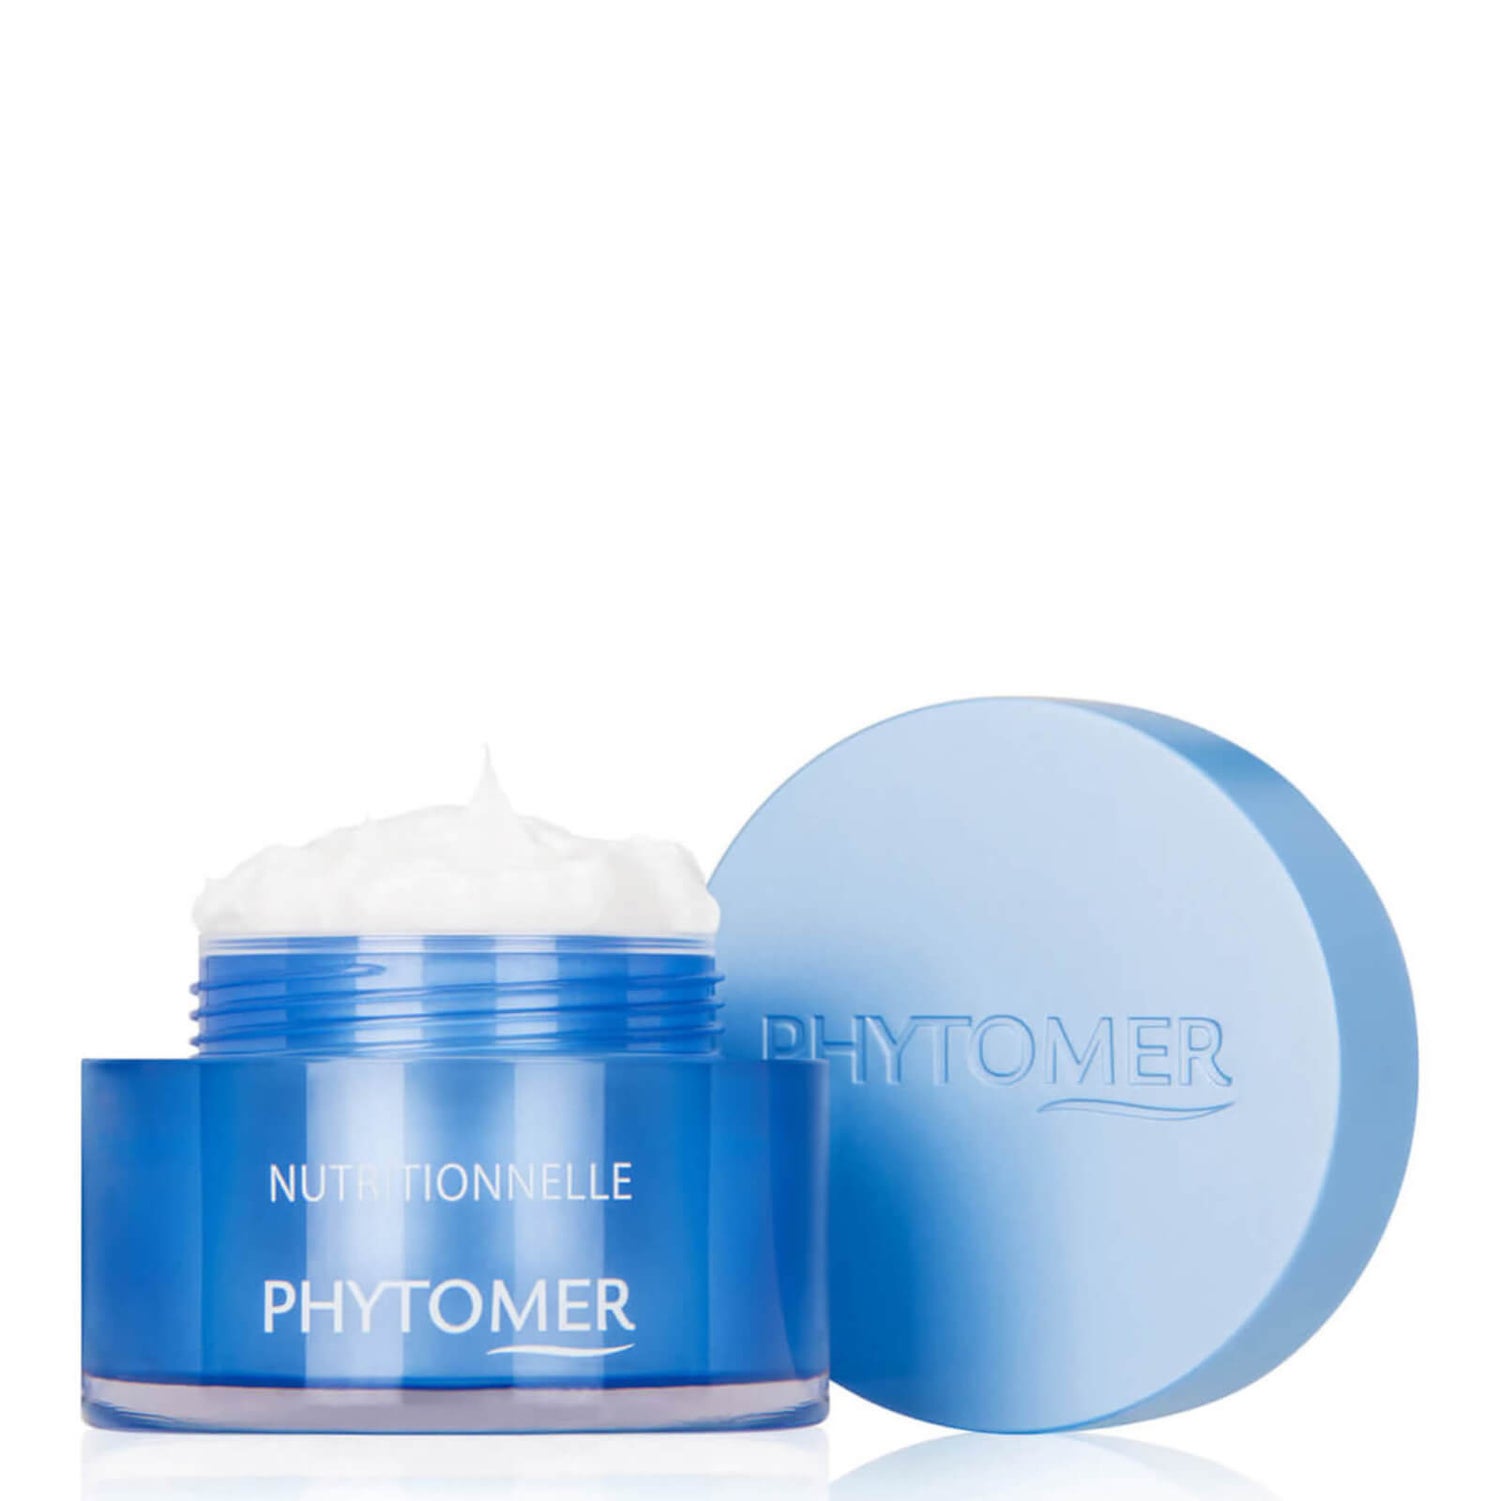 Phytomer Nutritionnelle Dry Skin Rescue Cream (1.6 fl. oz.)